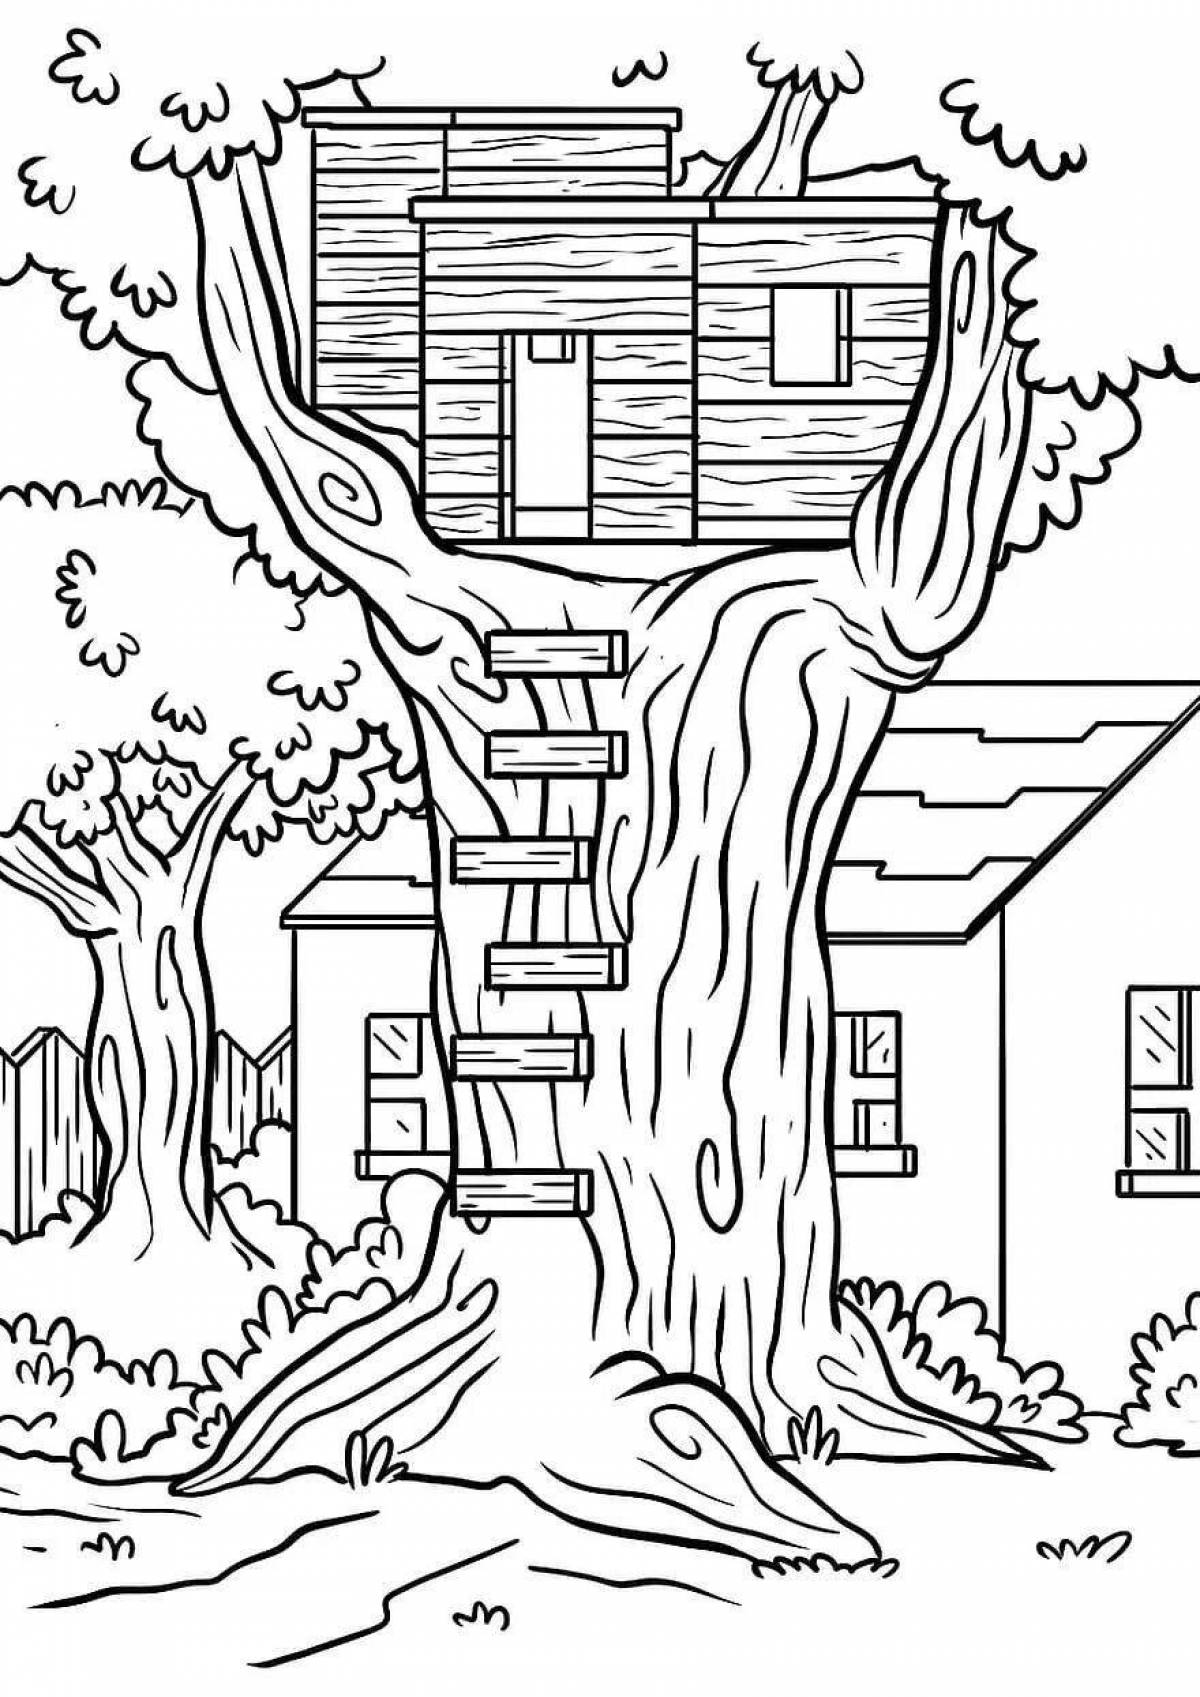 Tree house #6